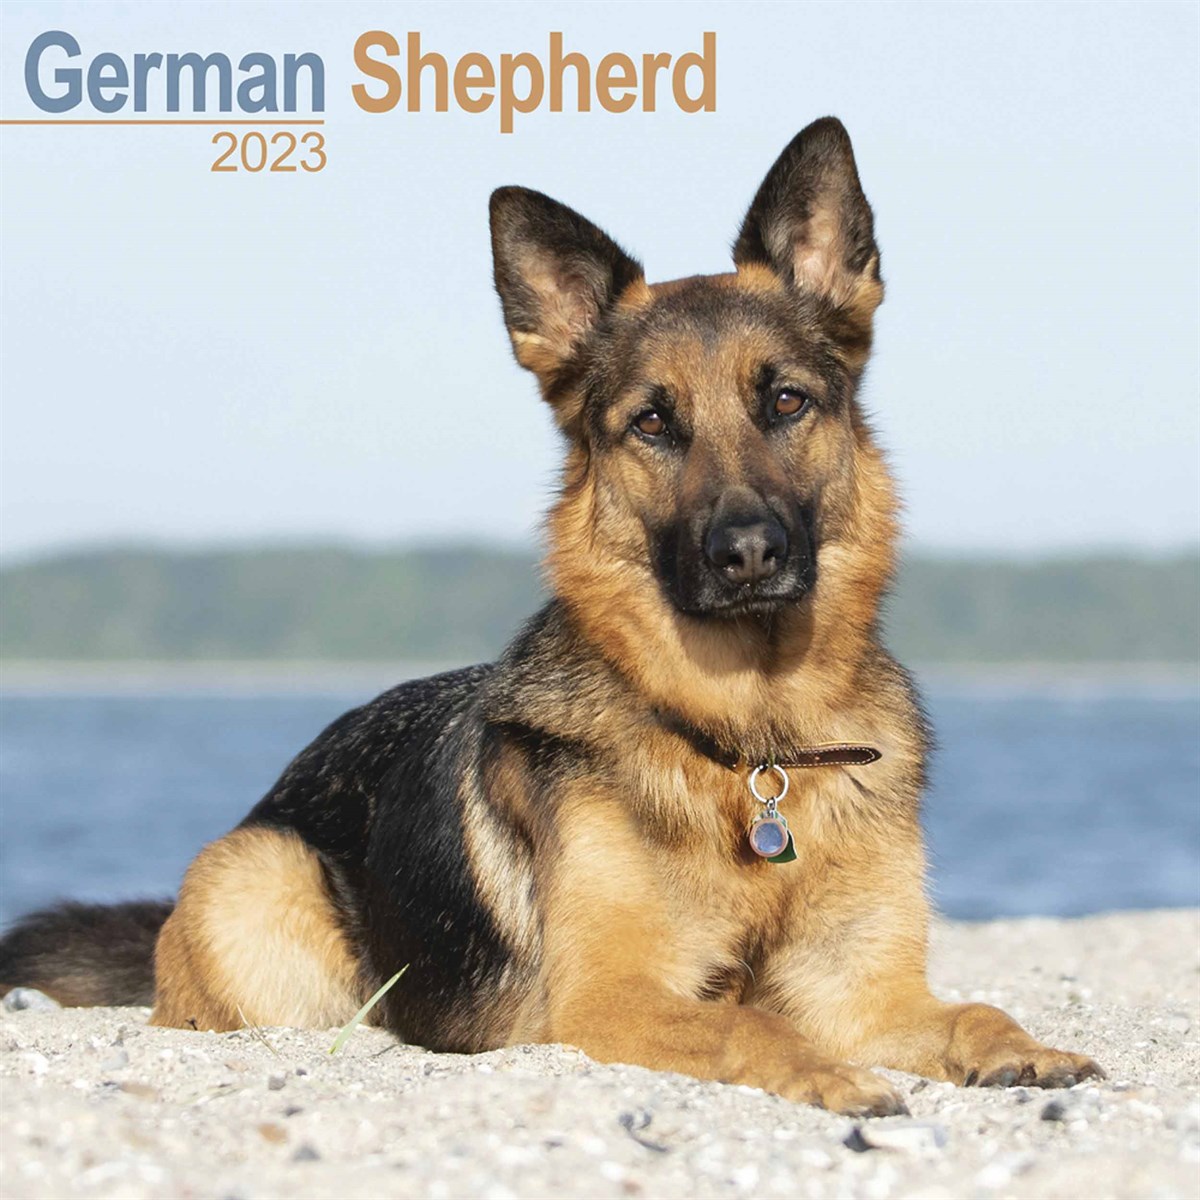 German Shepherd 2023 Calendars